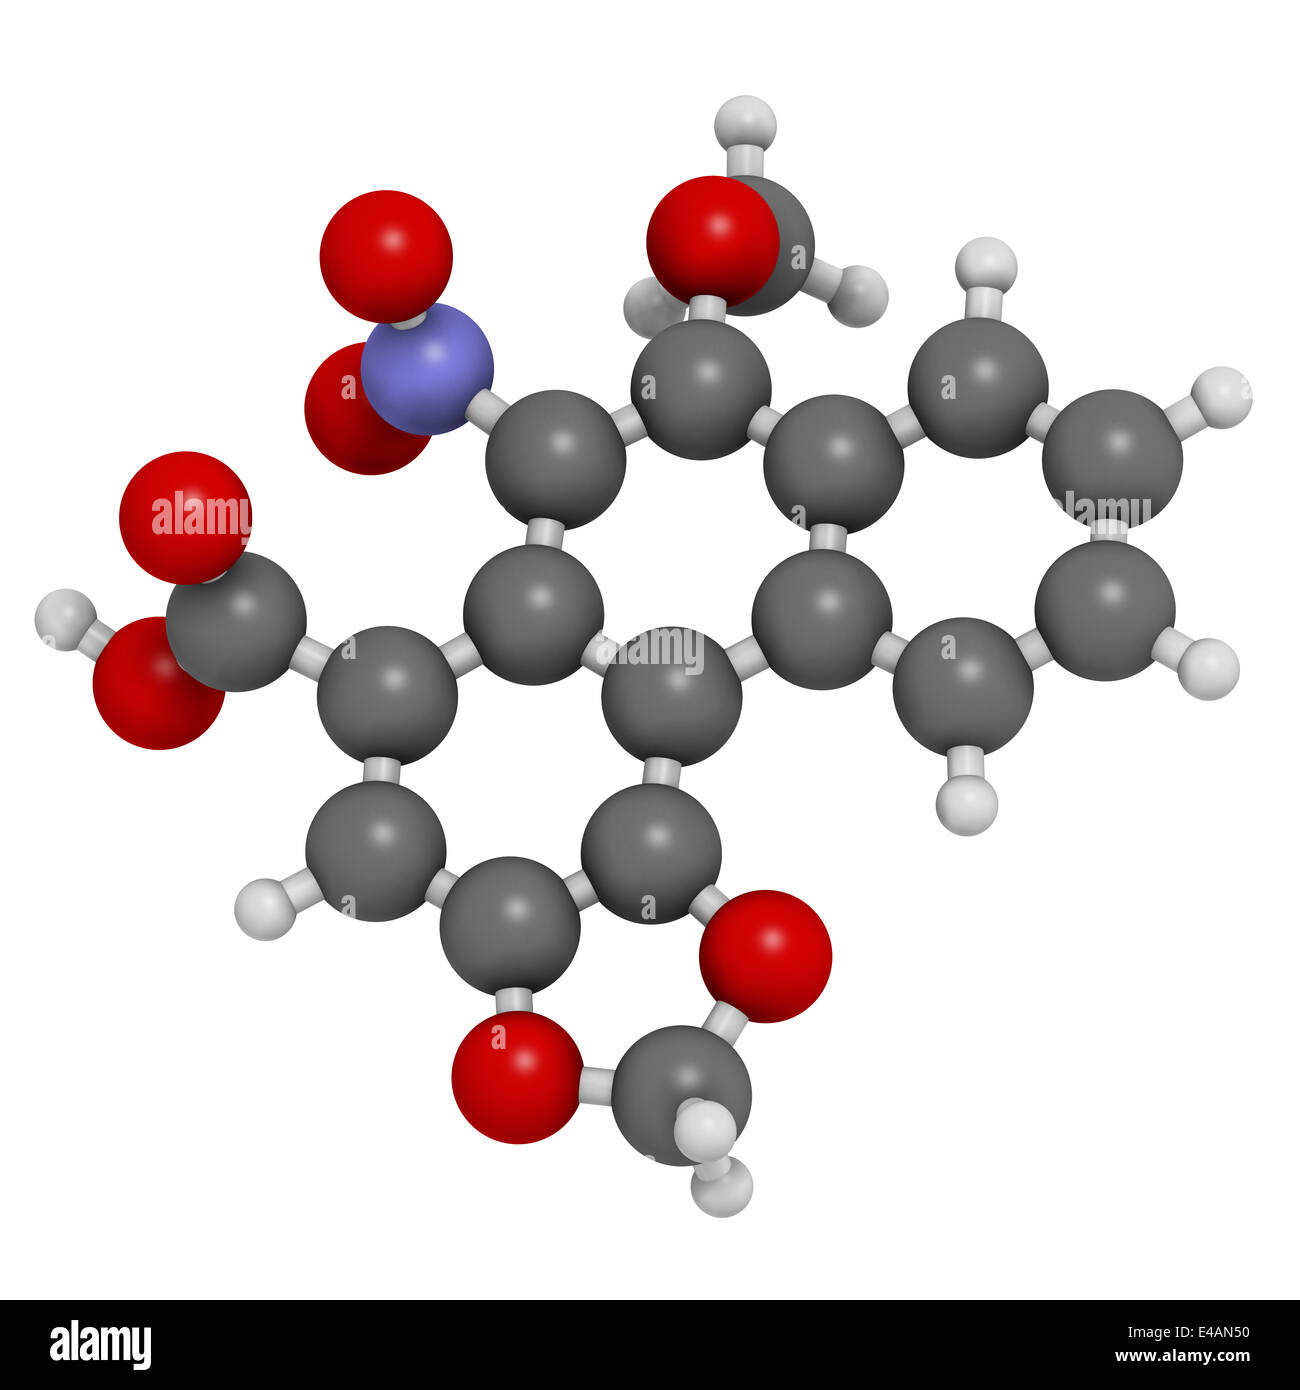 Aristolochic acid plant poison molecule. Has carcinogenic and nephrotoxic (kidney damaging) properties. Found in Aristolochia. Stock Photo